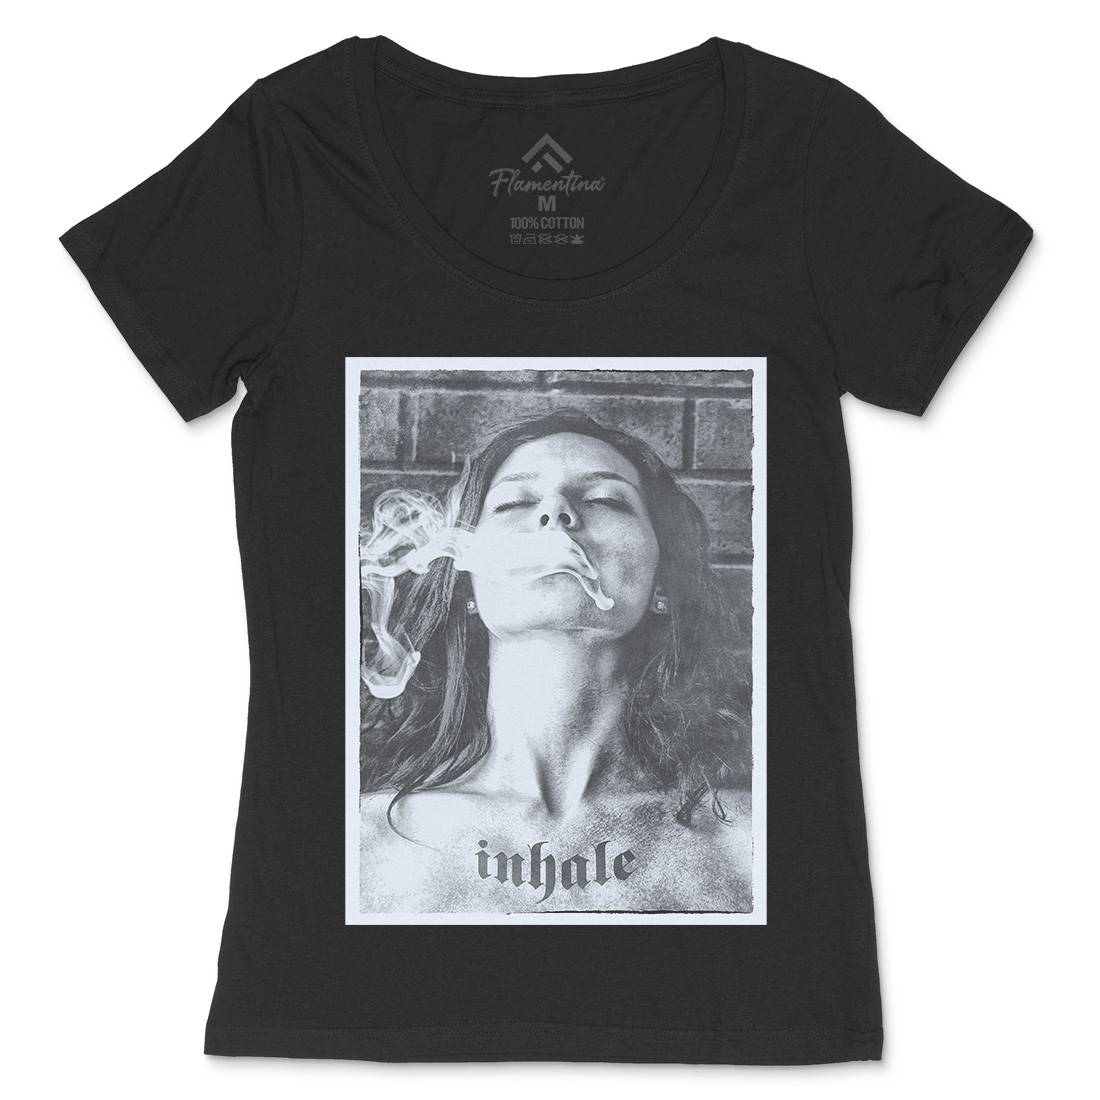 Inhale Womens Scoop Neck T-Shirt Drugs A851